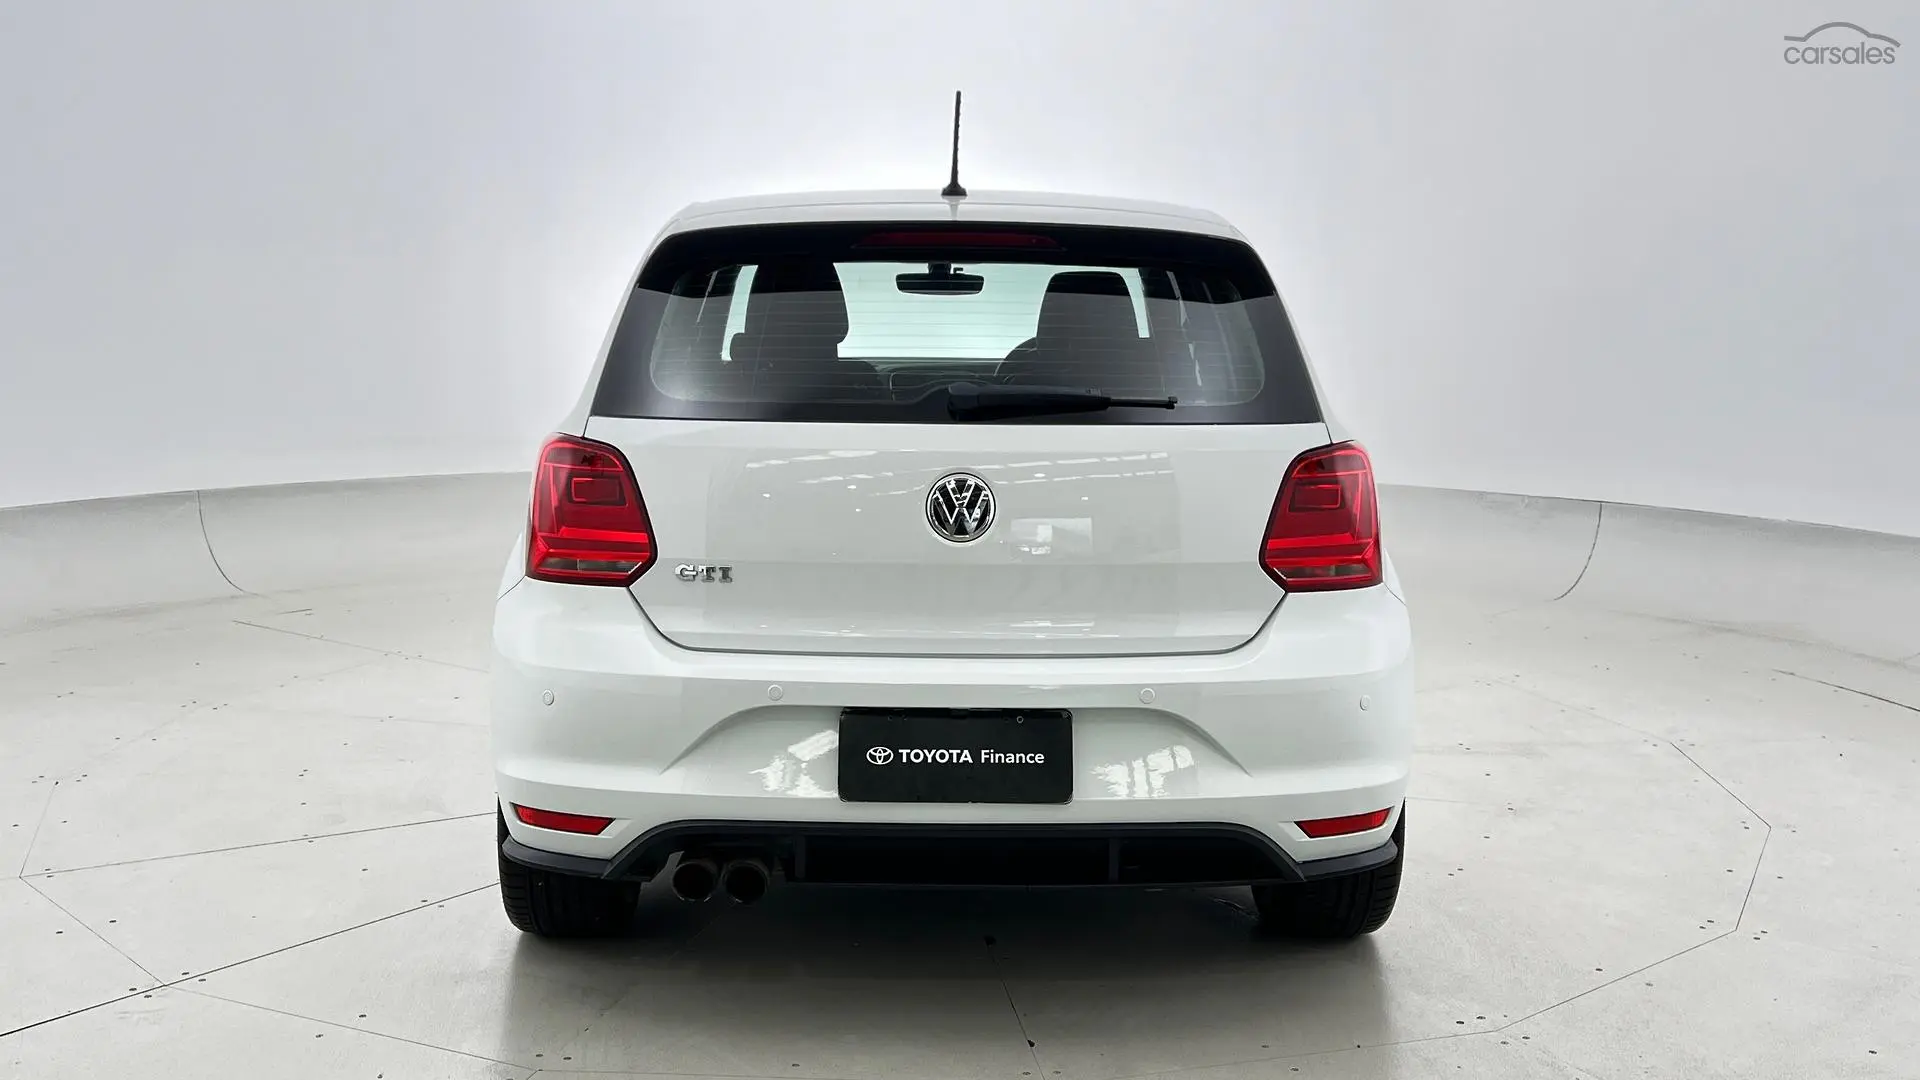 2016 Volkswagen Polo Image 6